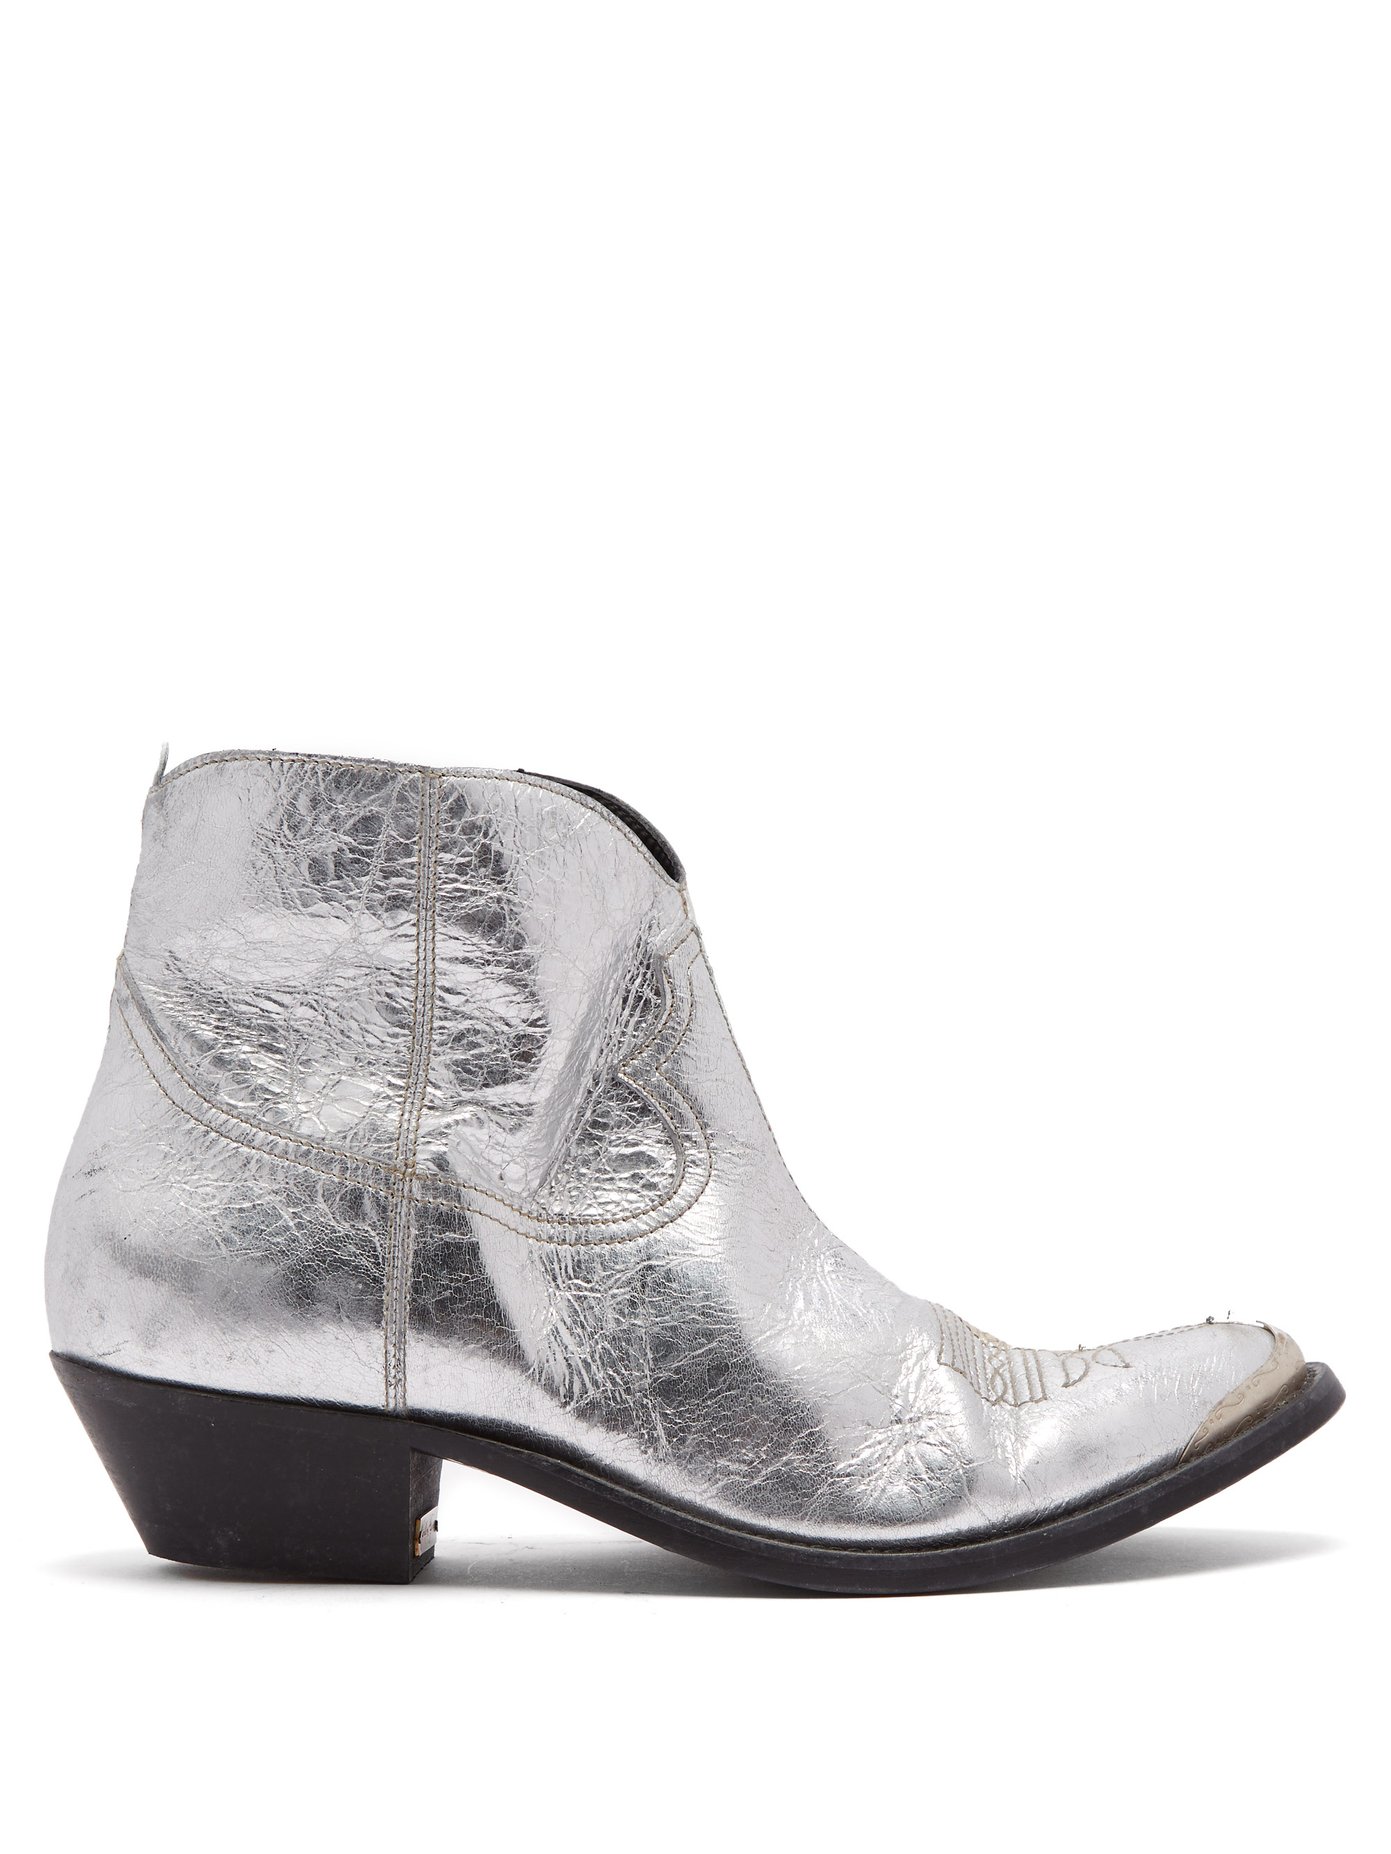 silver cowboy boots uk